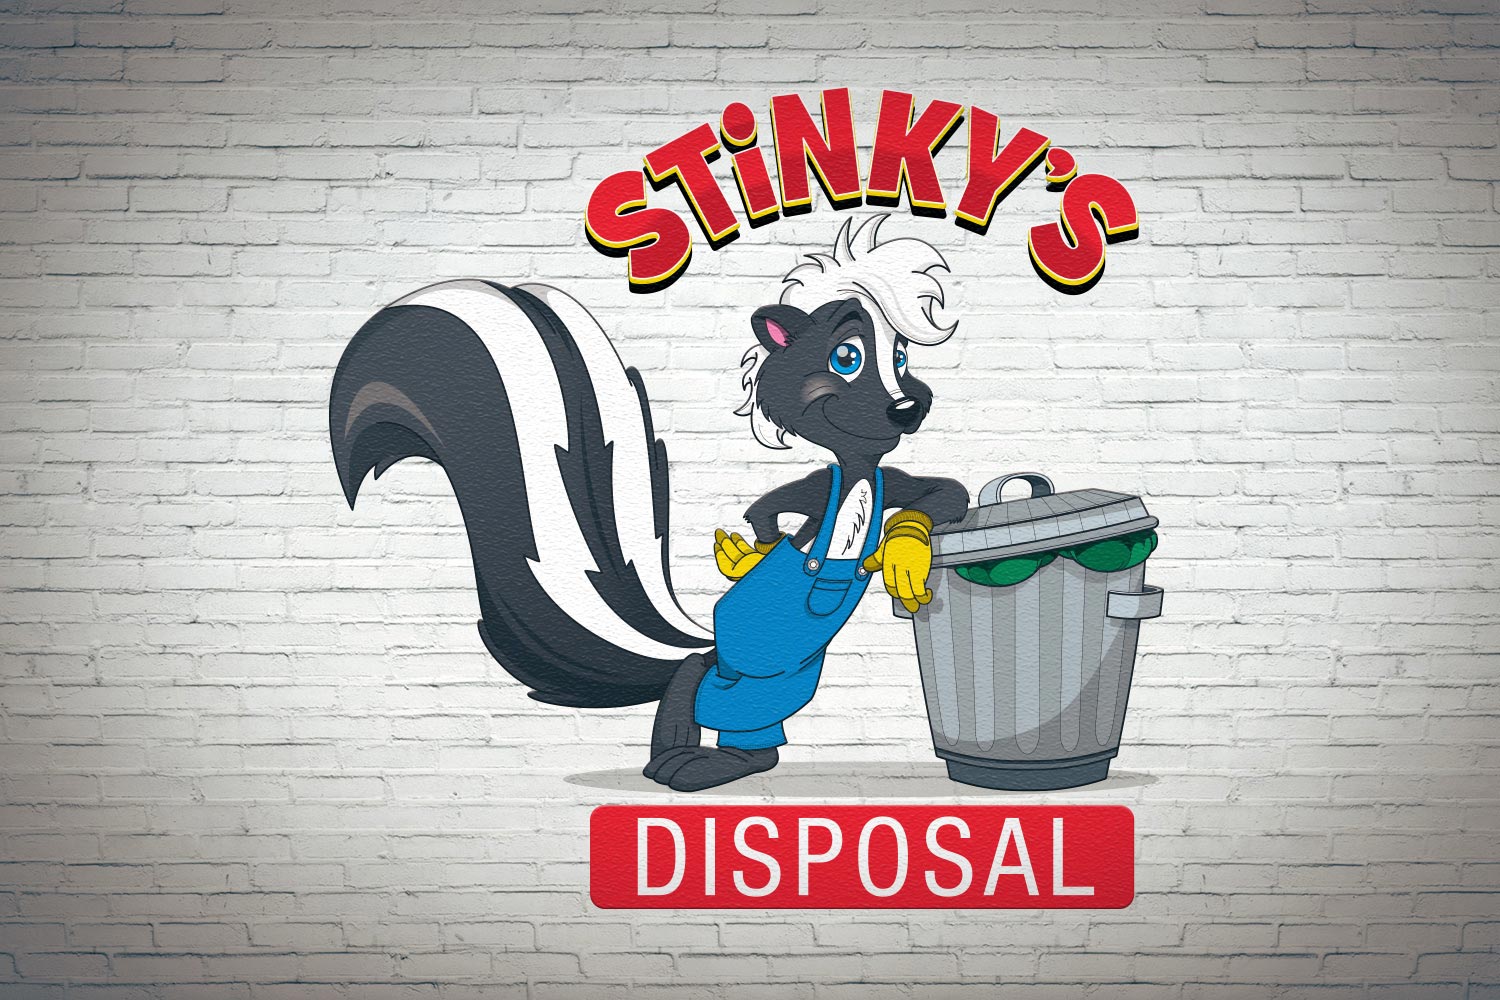 Waste management corporate mascot